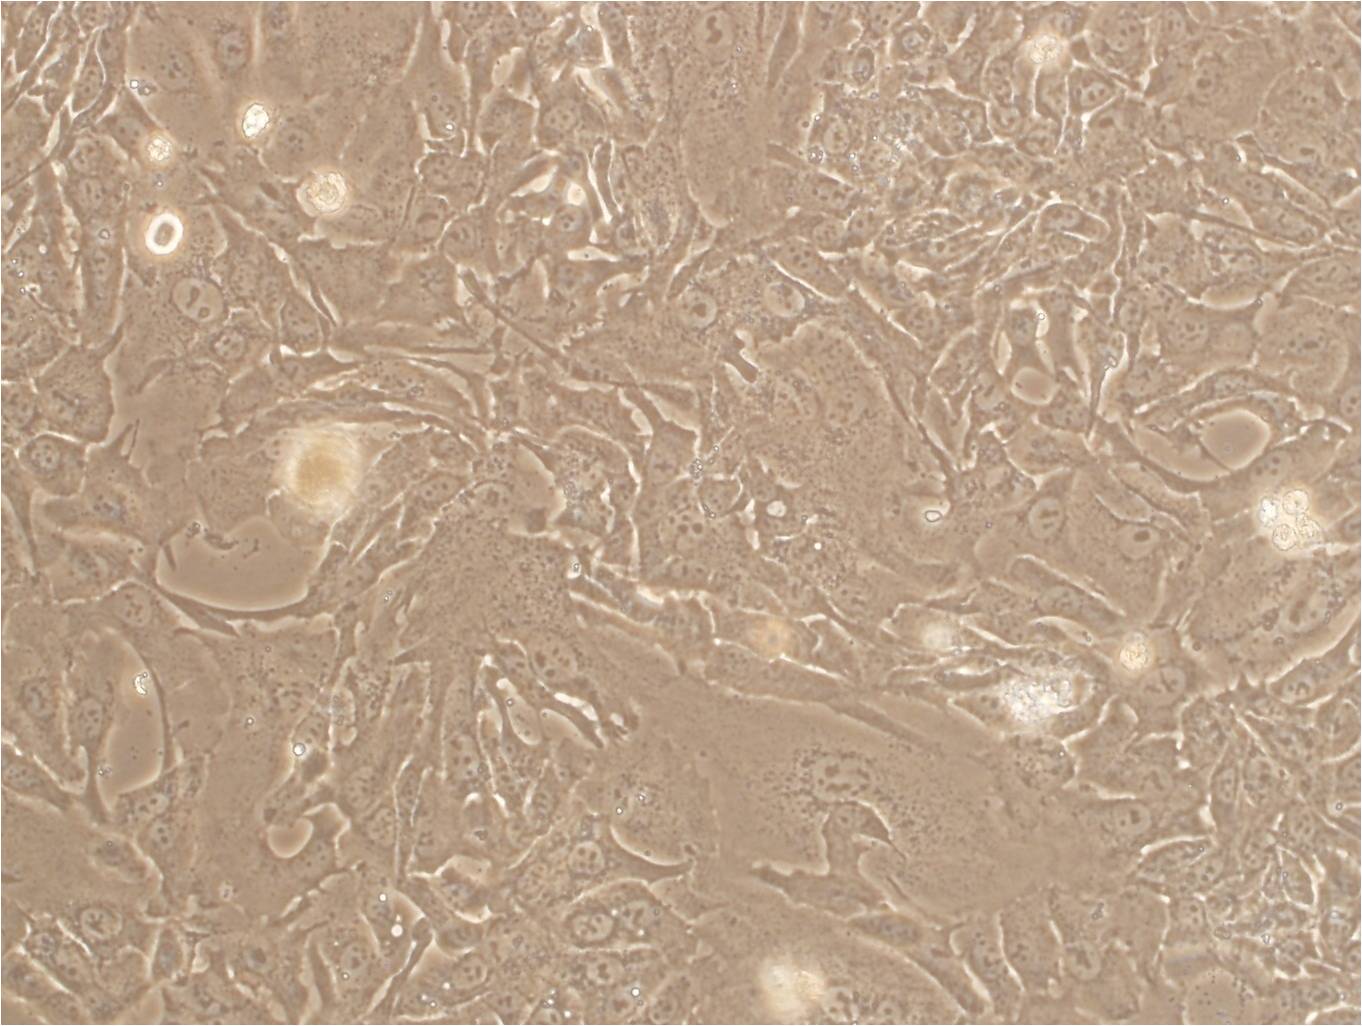 SK-HEP-1 cell line人肝癌细胞系